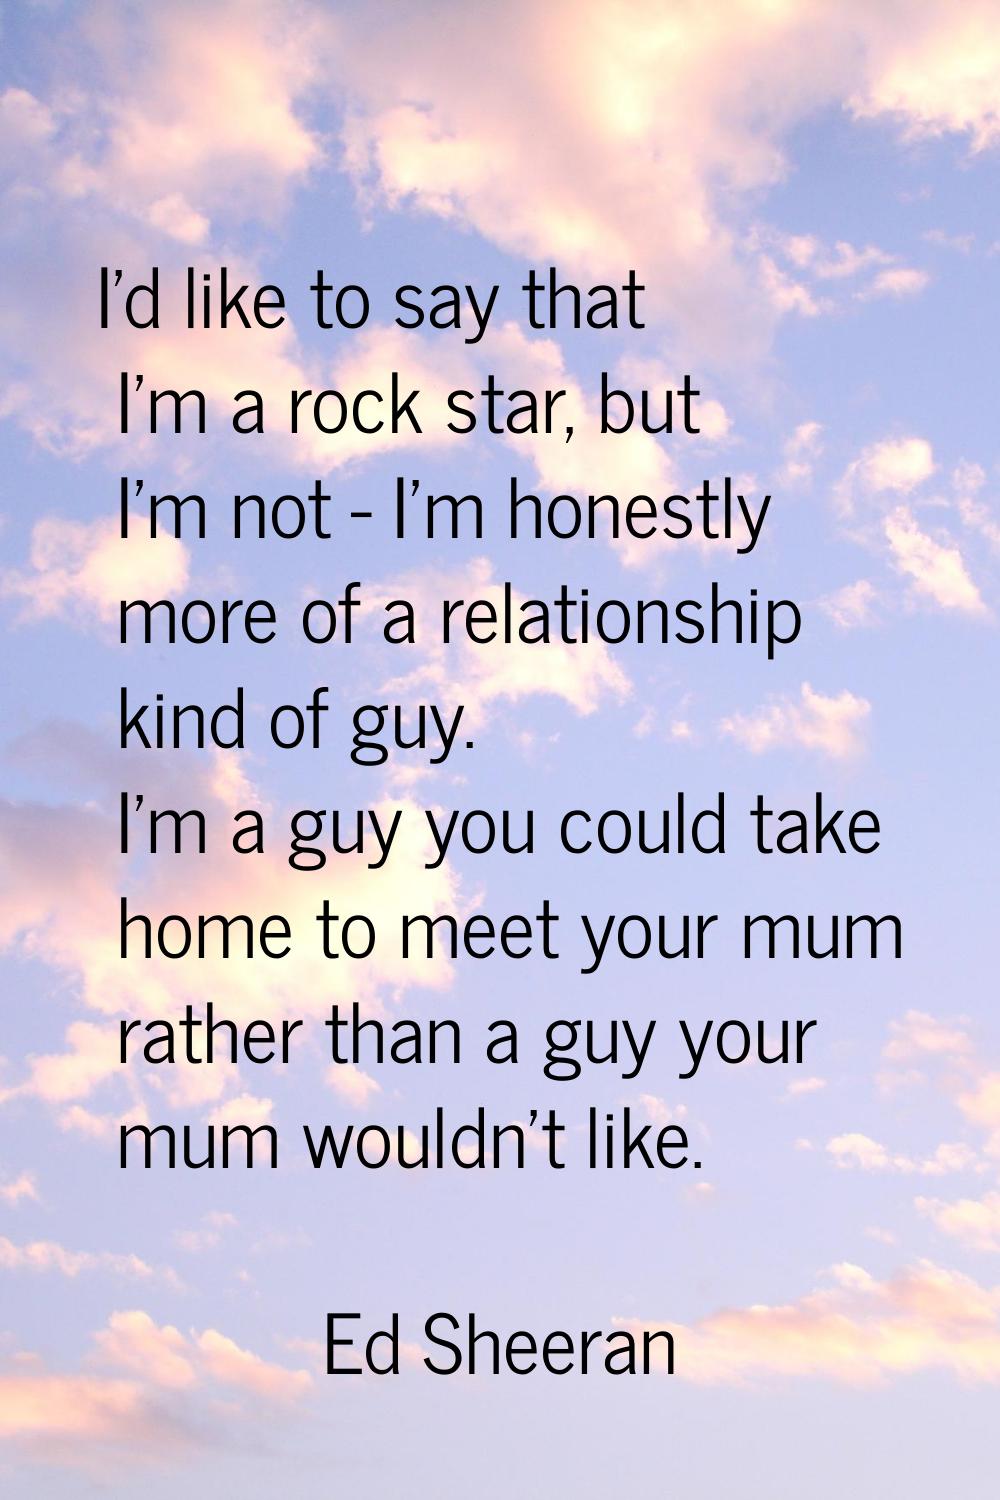 I'd like to say that I'm a rock star, but I'm not - I'm honestly more of a relationship kind of guy